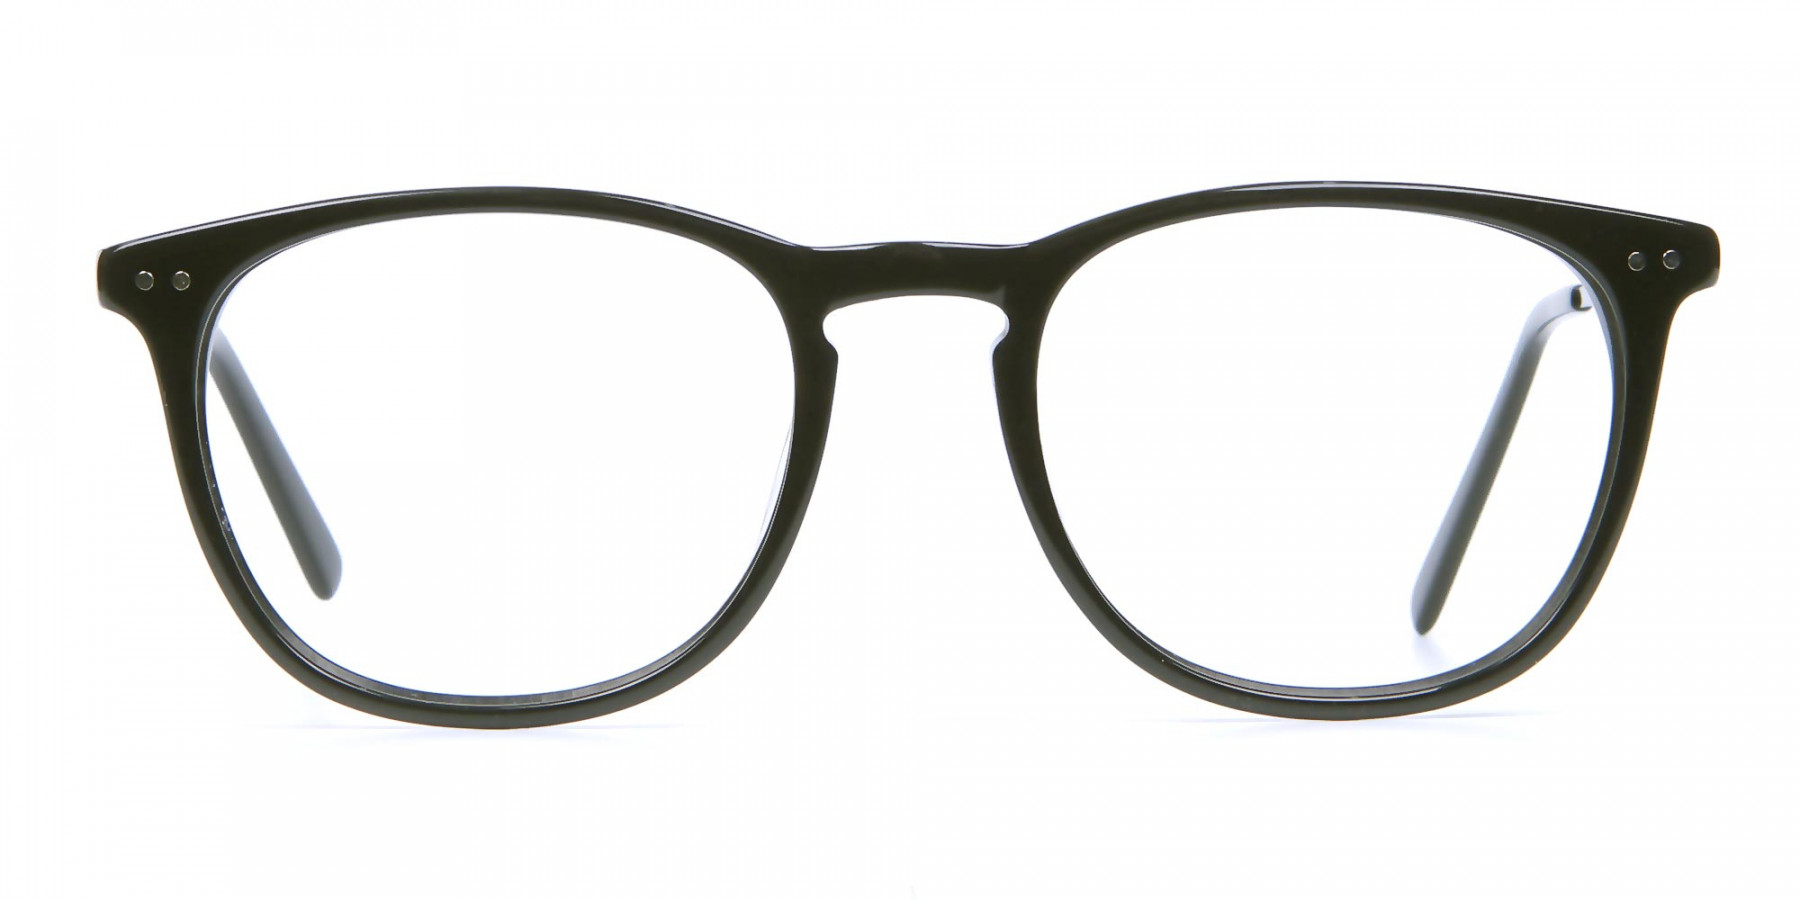  Black Round Glasses, Eyeglasses